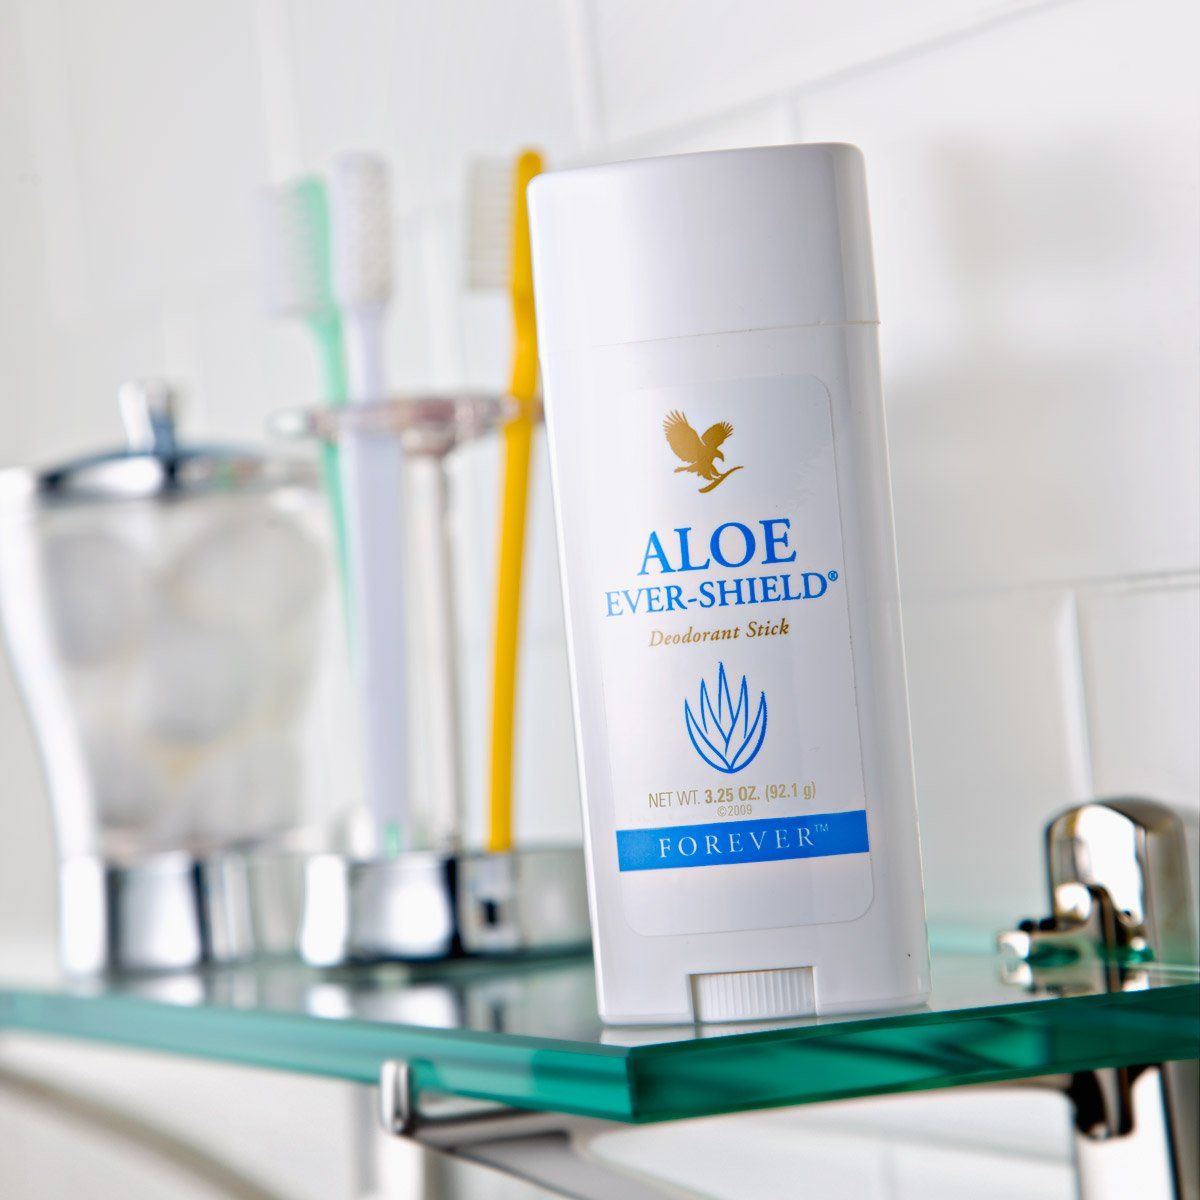 Aloe Ever-Shield deodorant